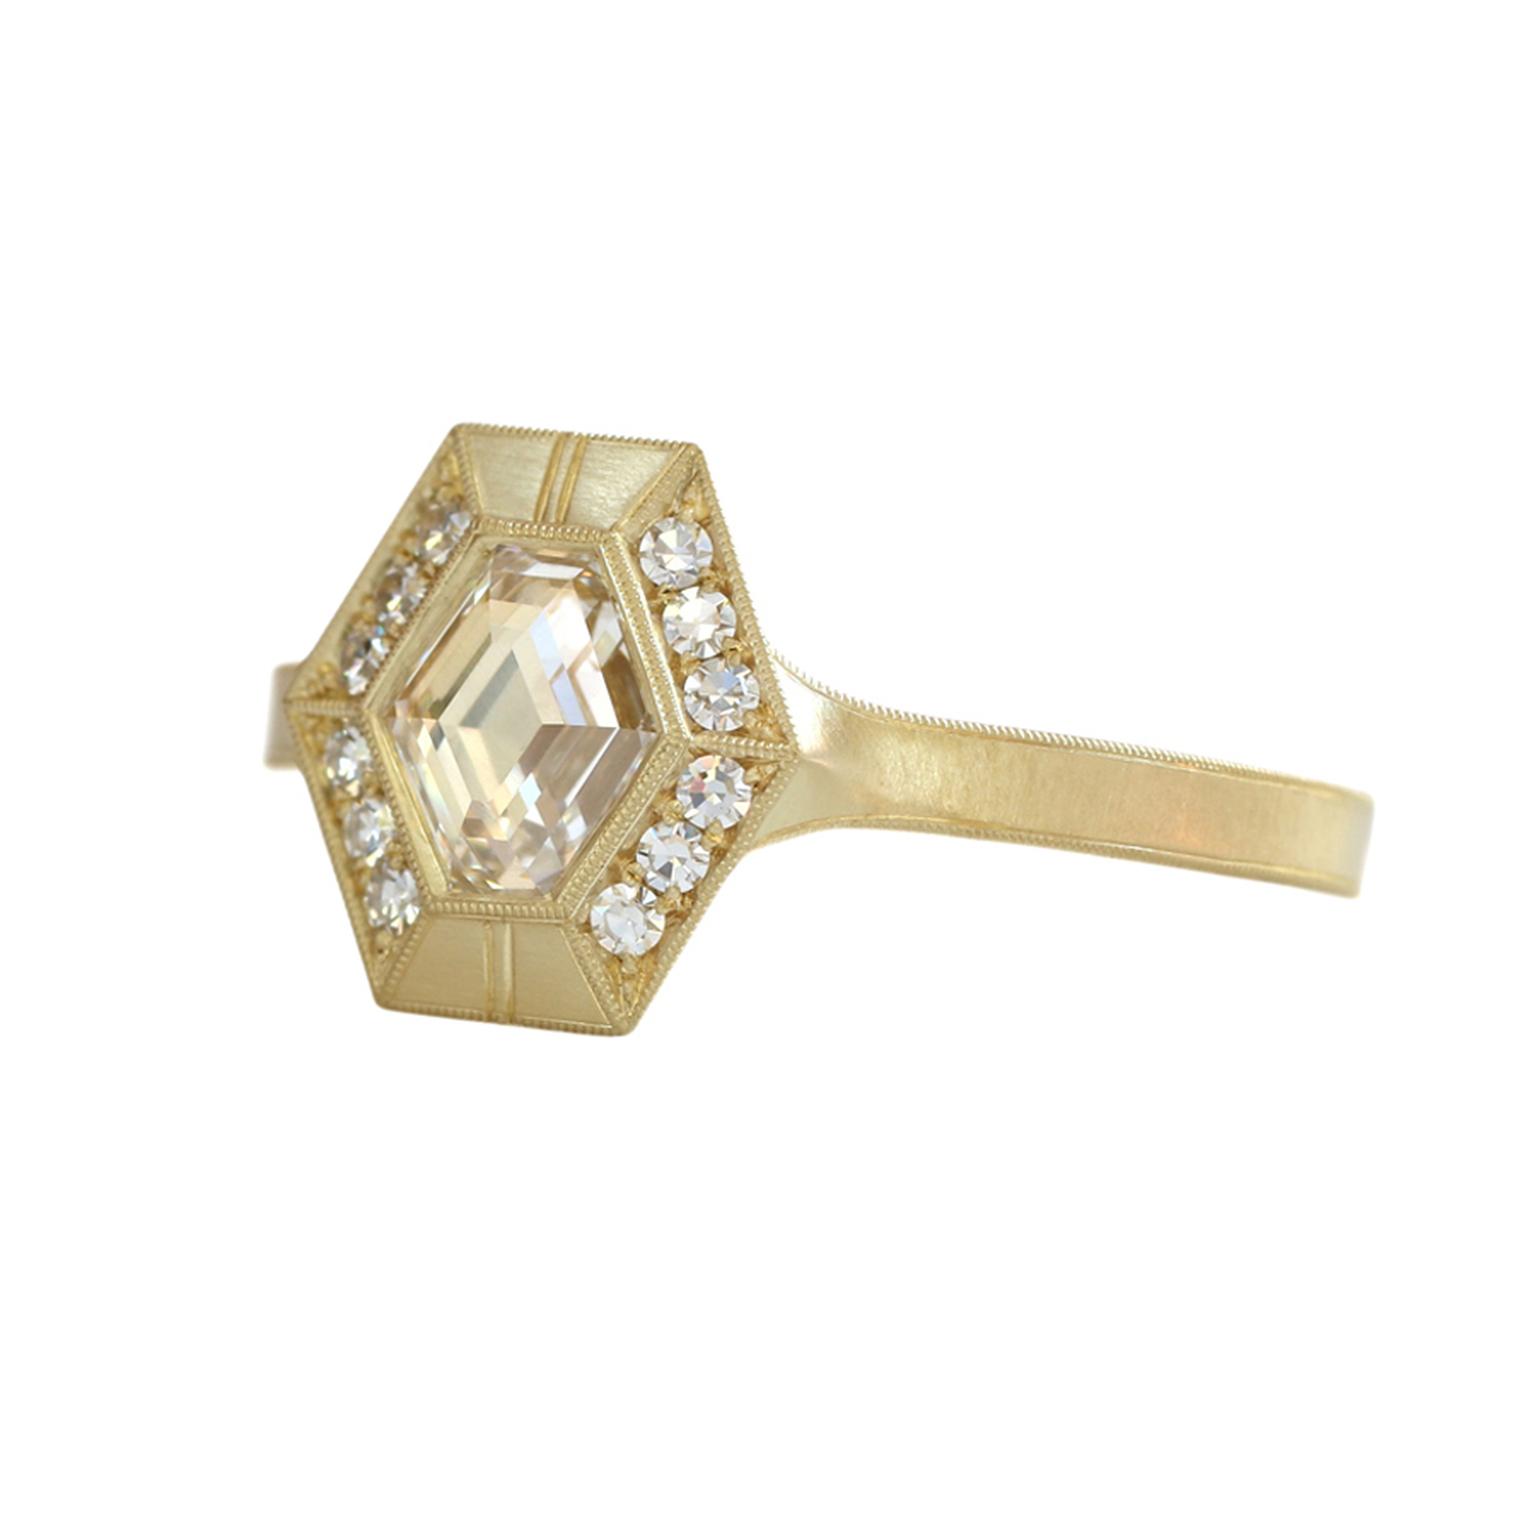 Erika Winters Lois Halo vintage-style engagement ring